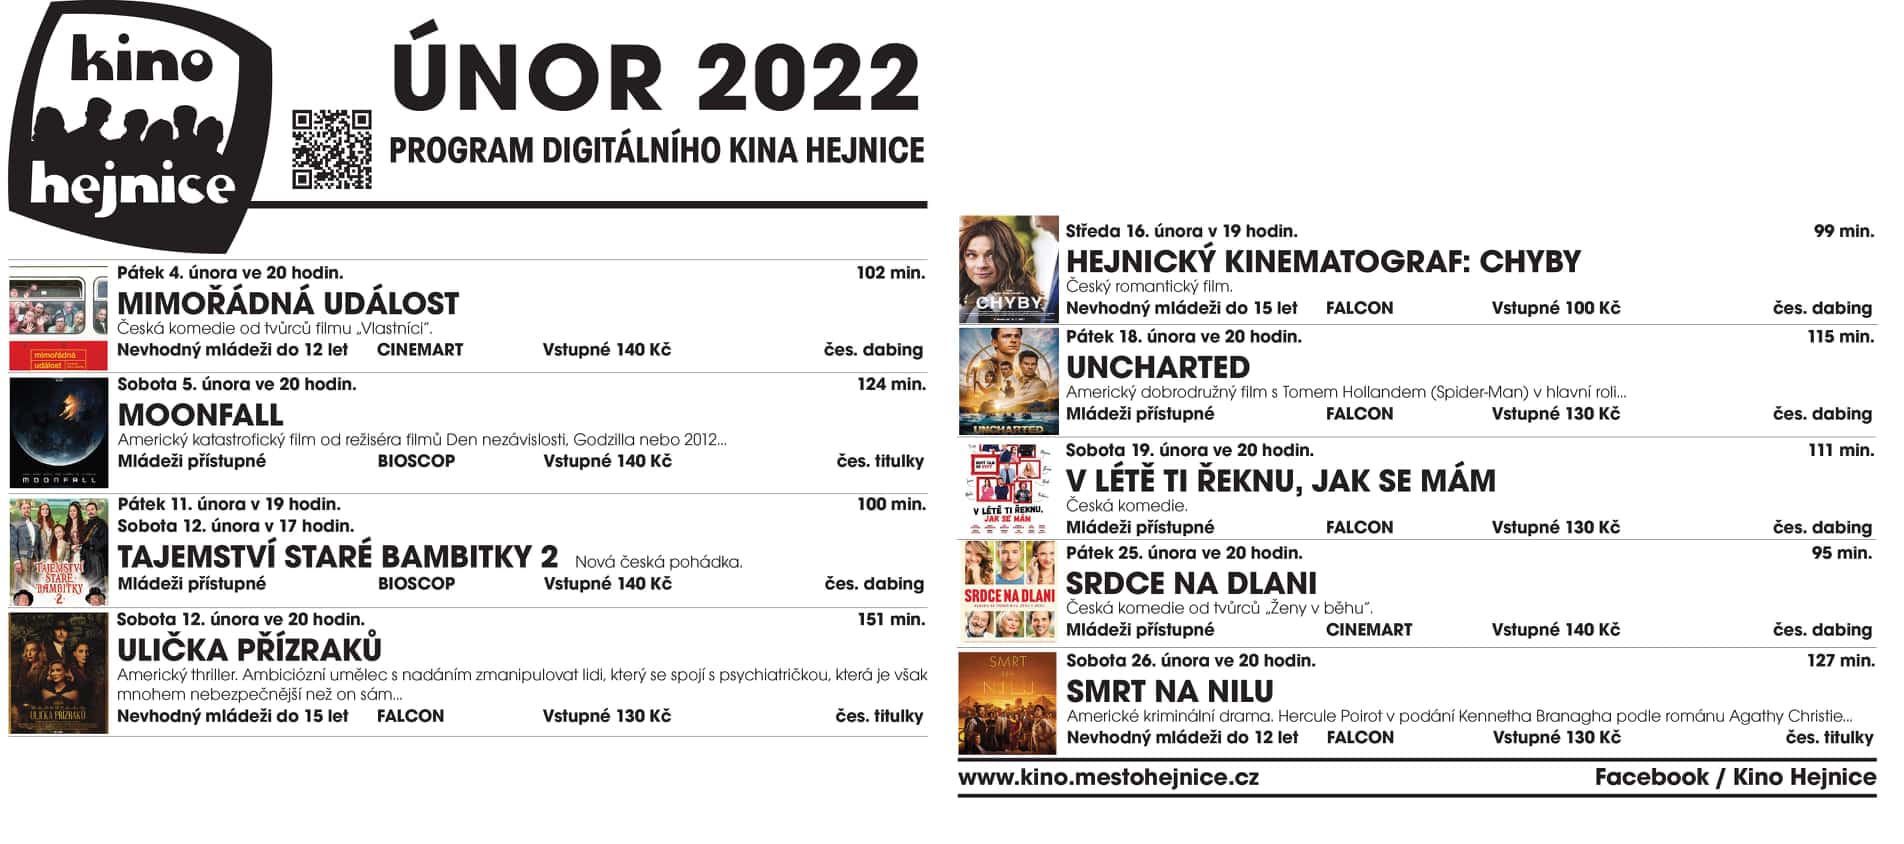 058 kino Hejnice program unor 2022 frydlanstko 1